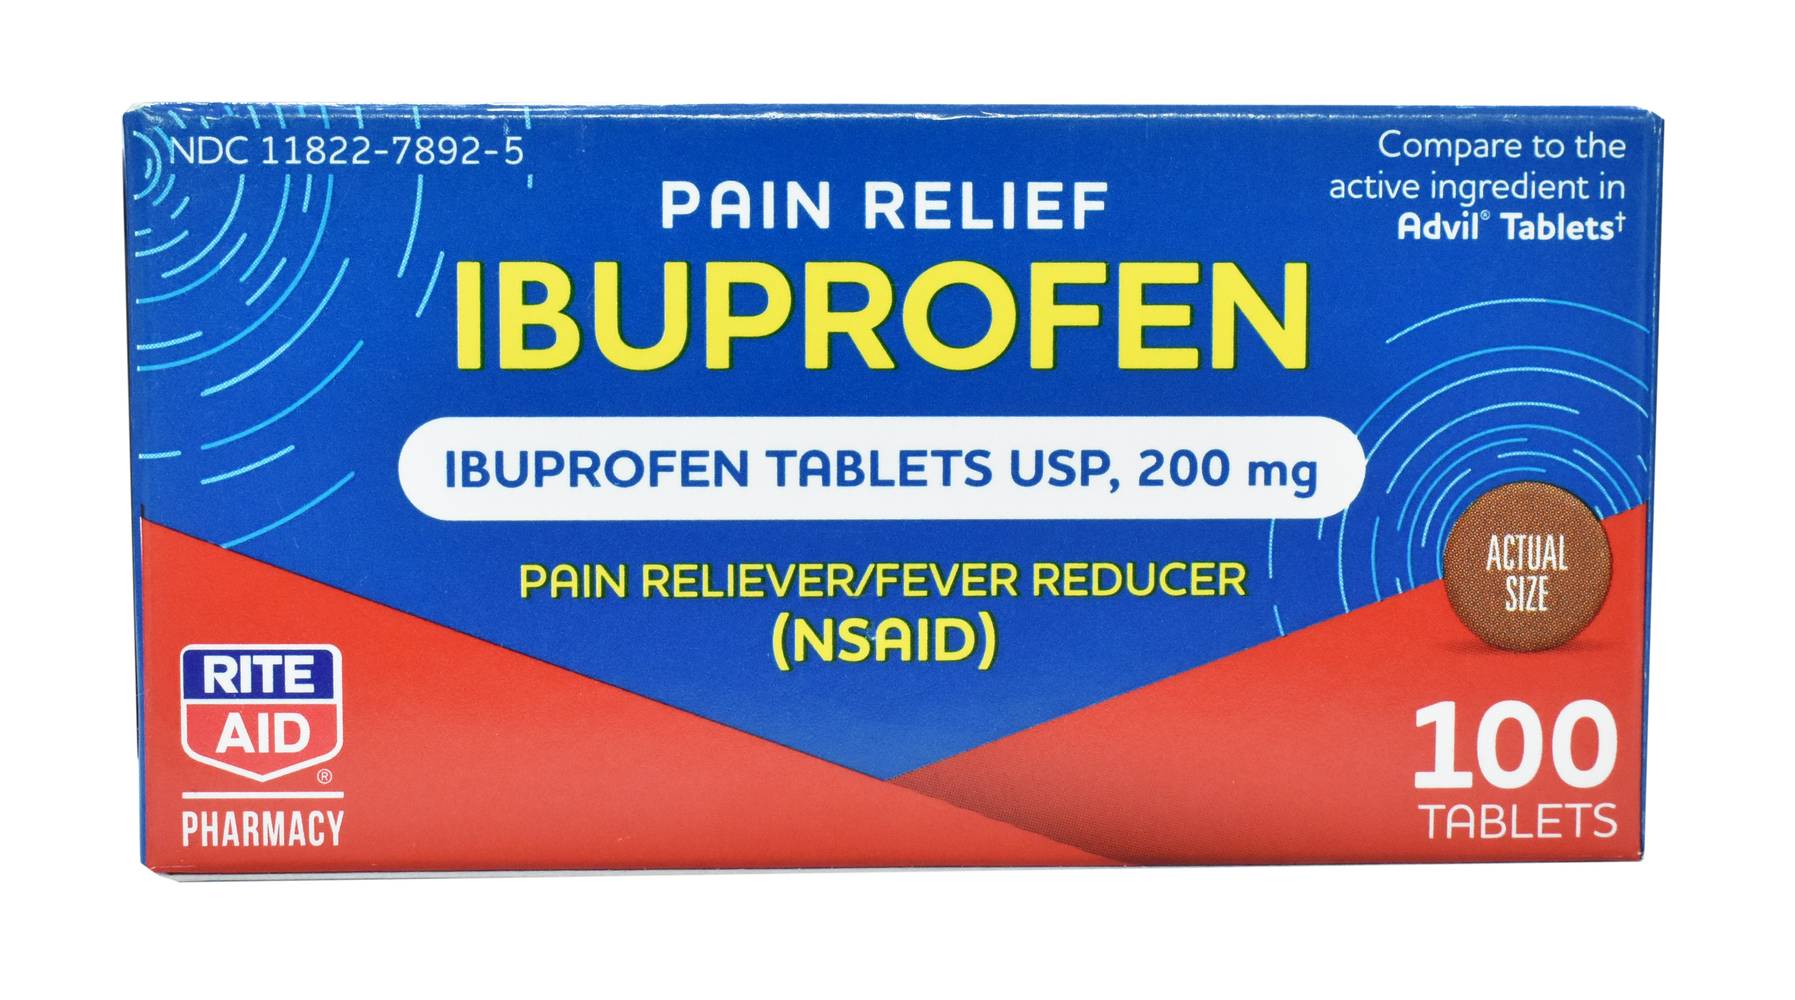 Rite Aid Ibuprofen 200 mg Tablets (100 ct)